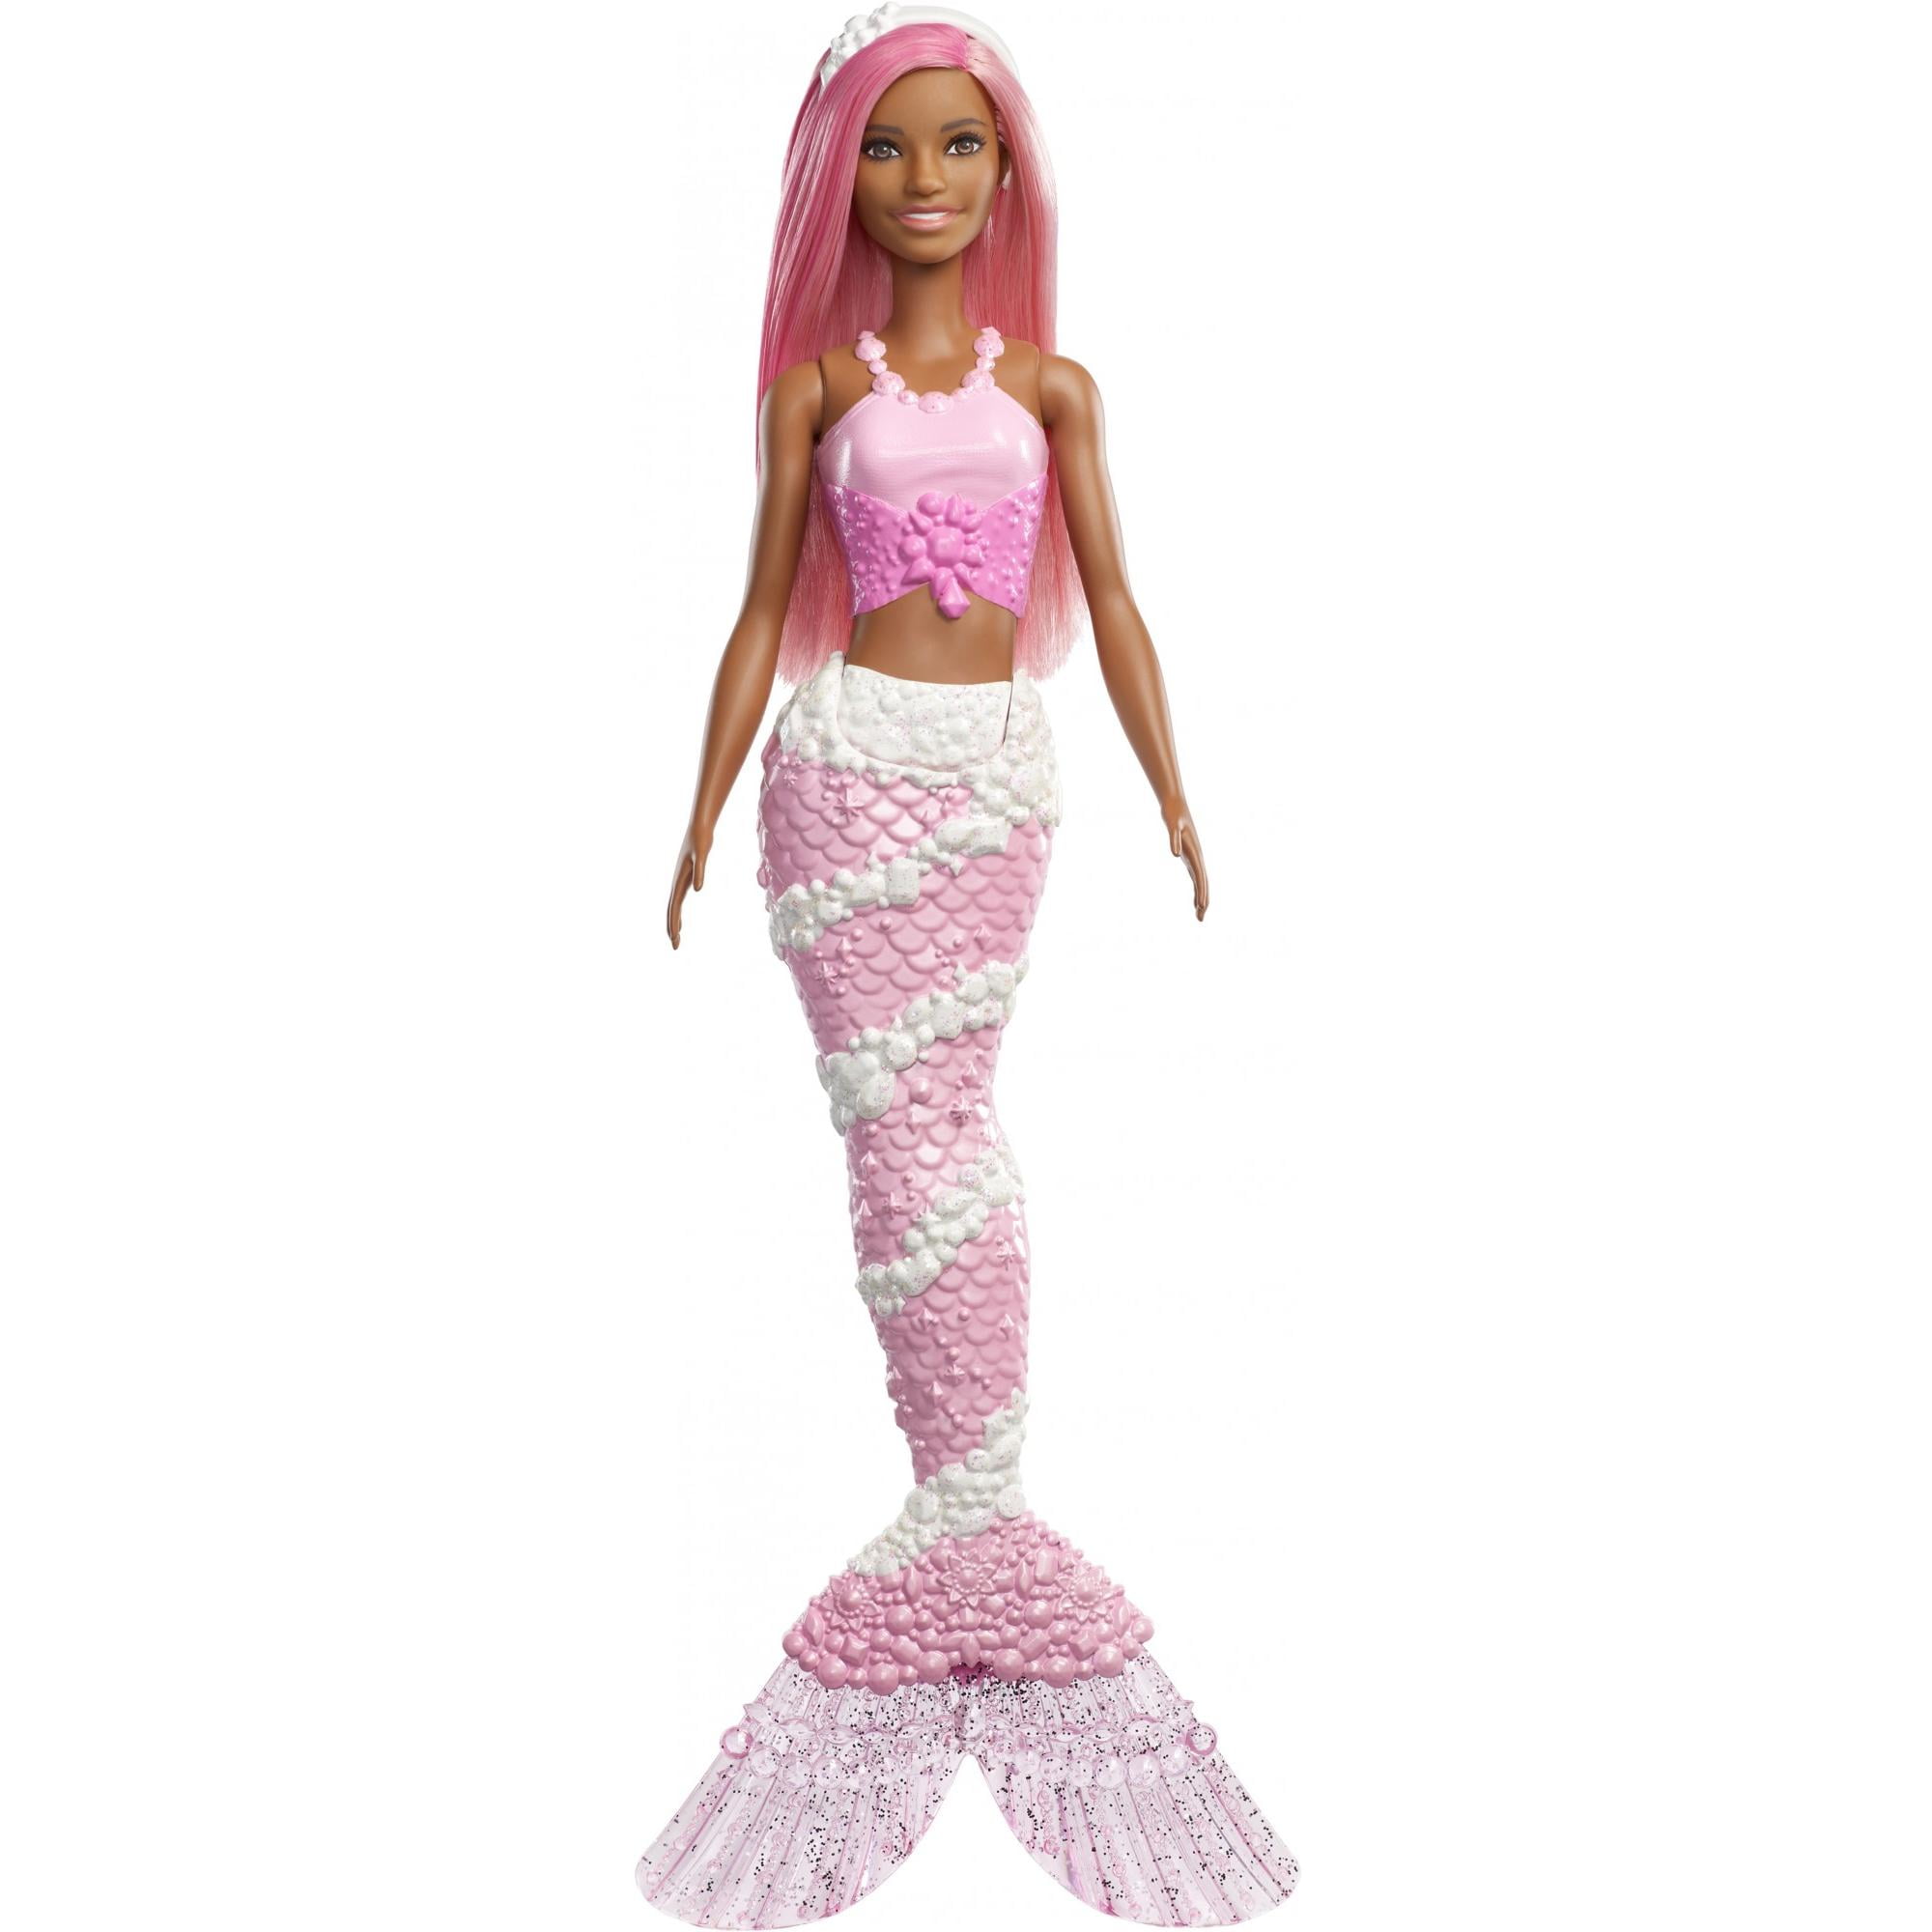 Barbie Dreamtopia Mermaid Doll with Long Pink Hair - Walmart.com